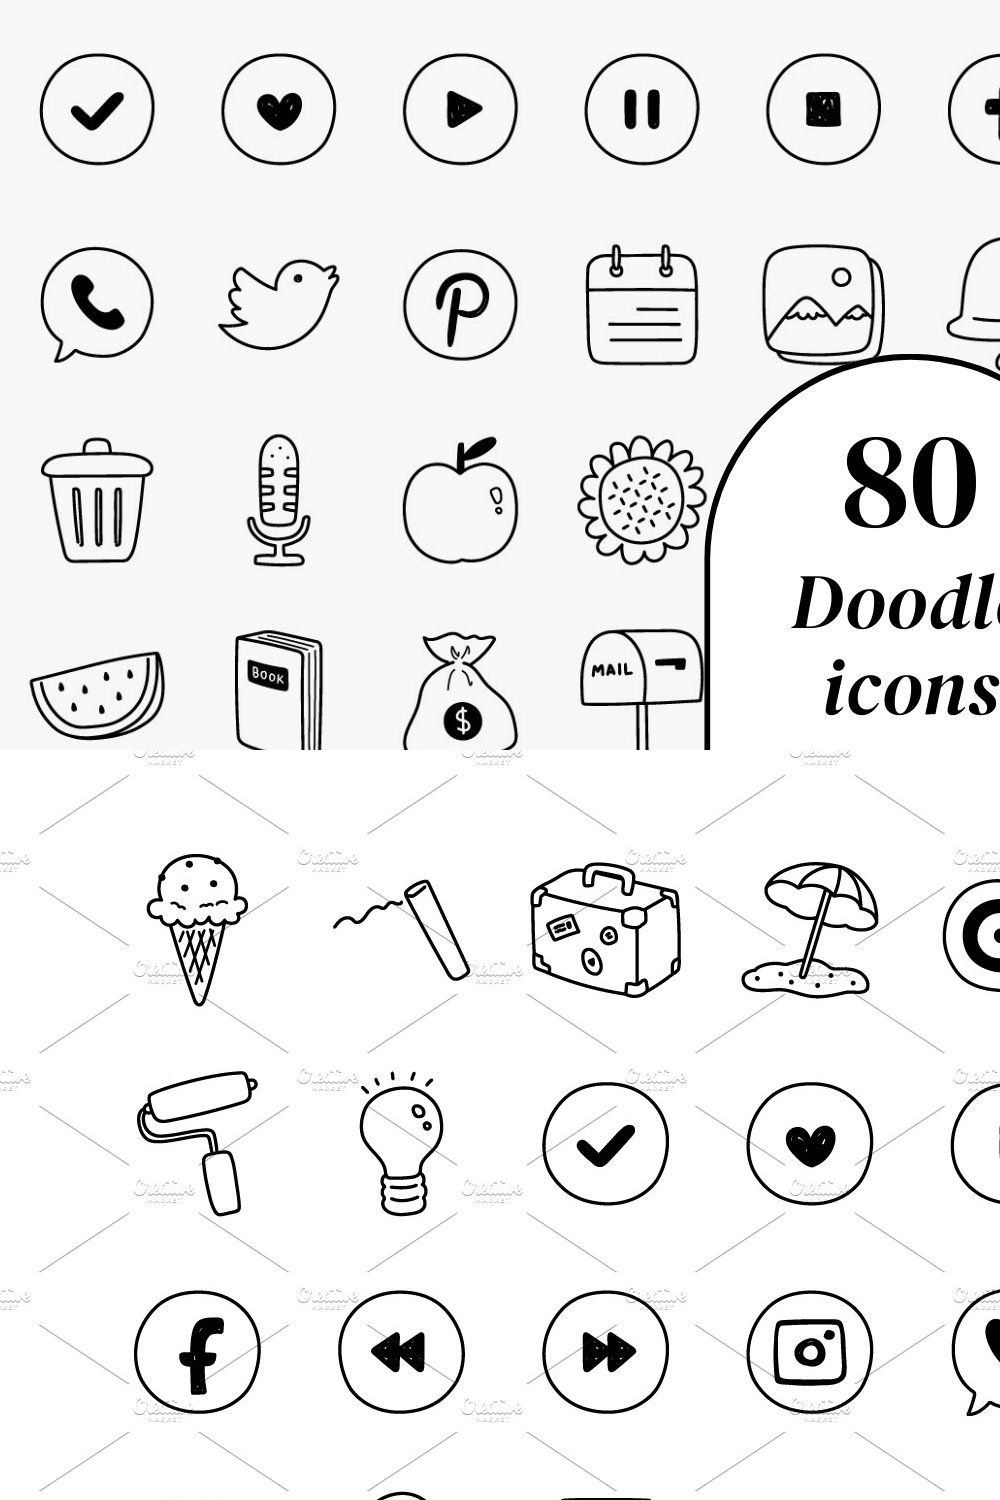 80 doodle icons set pinterest preview image.